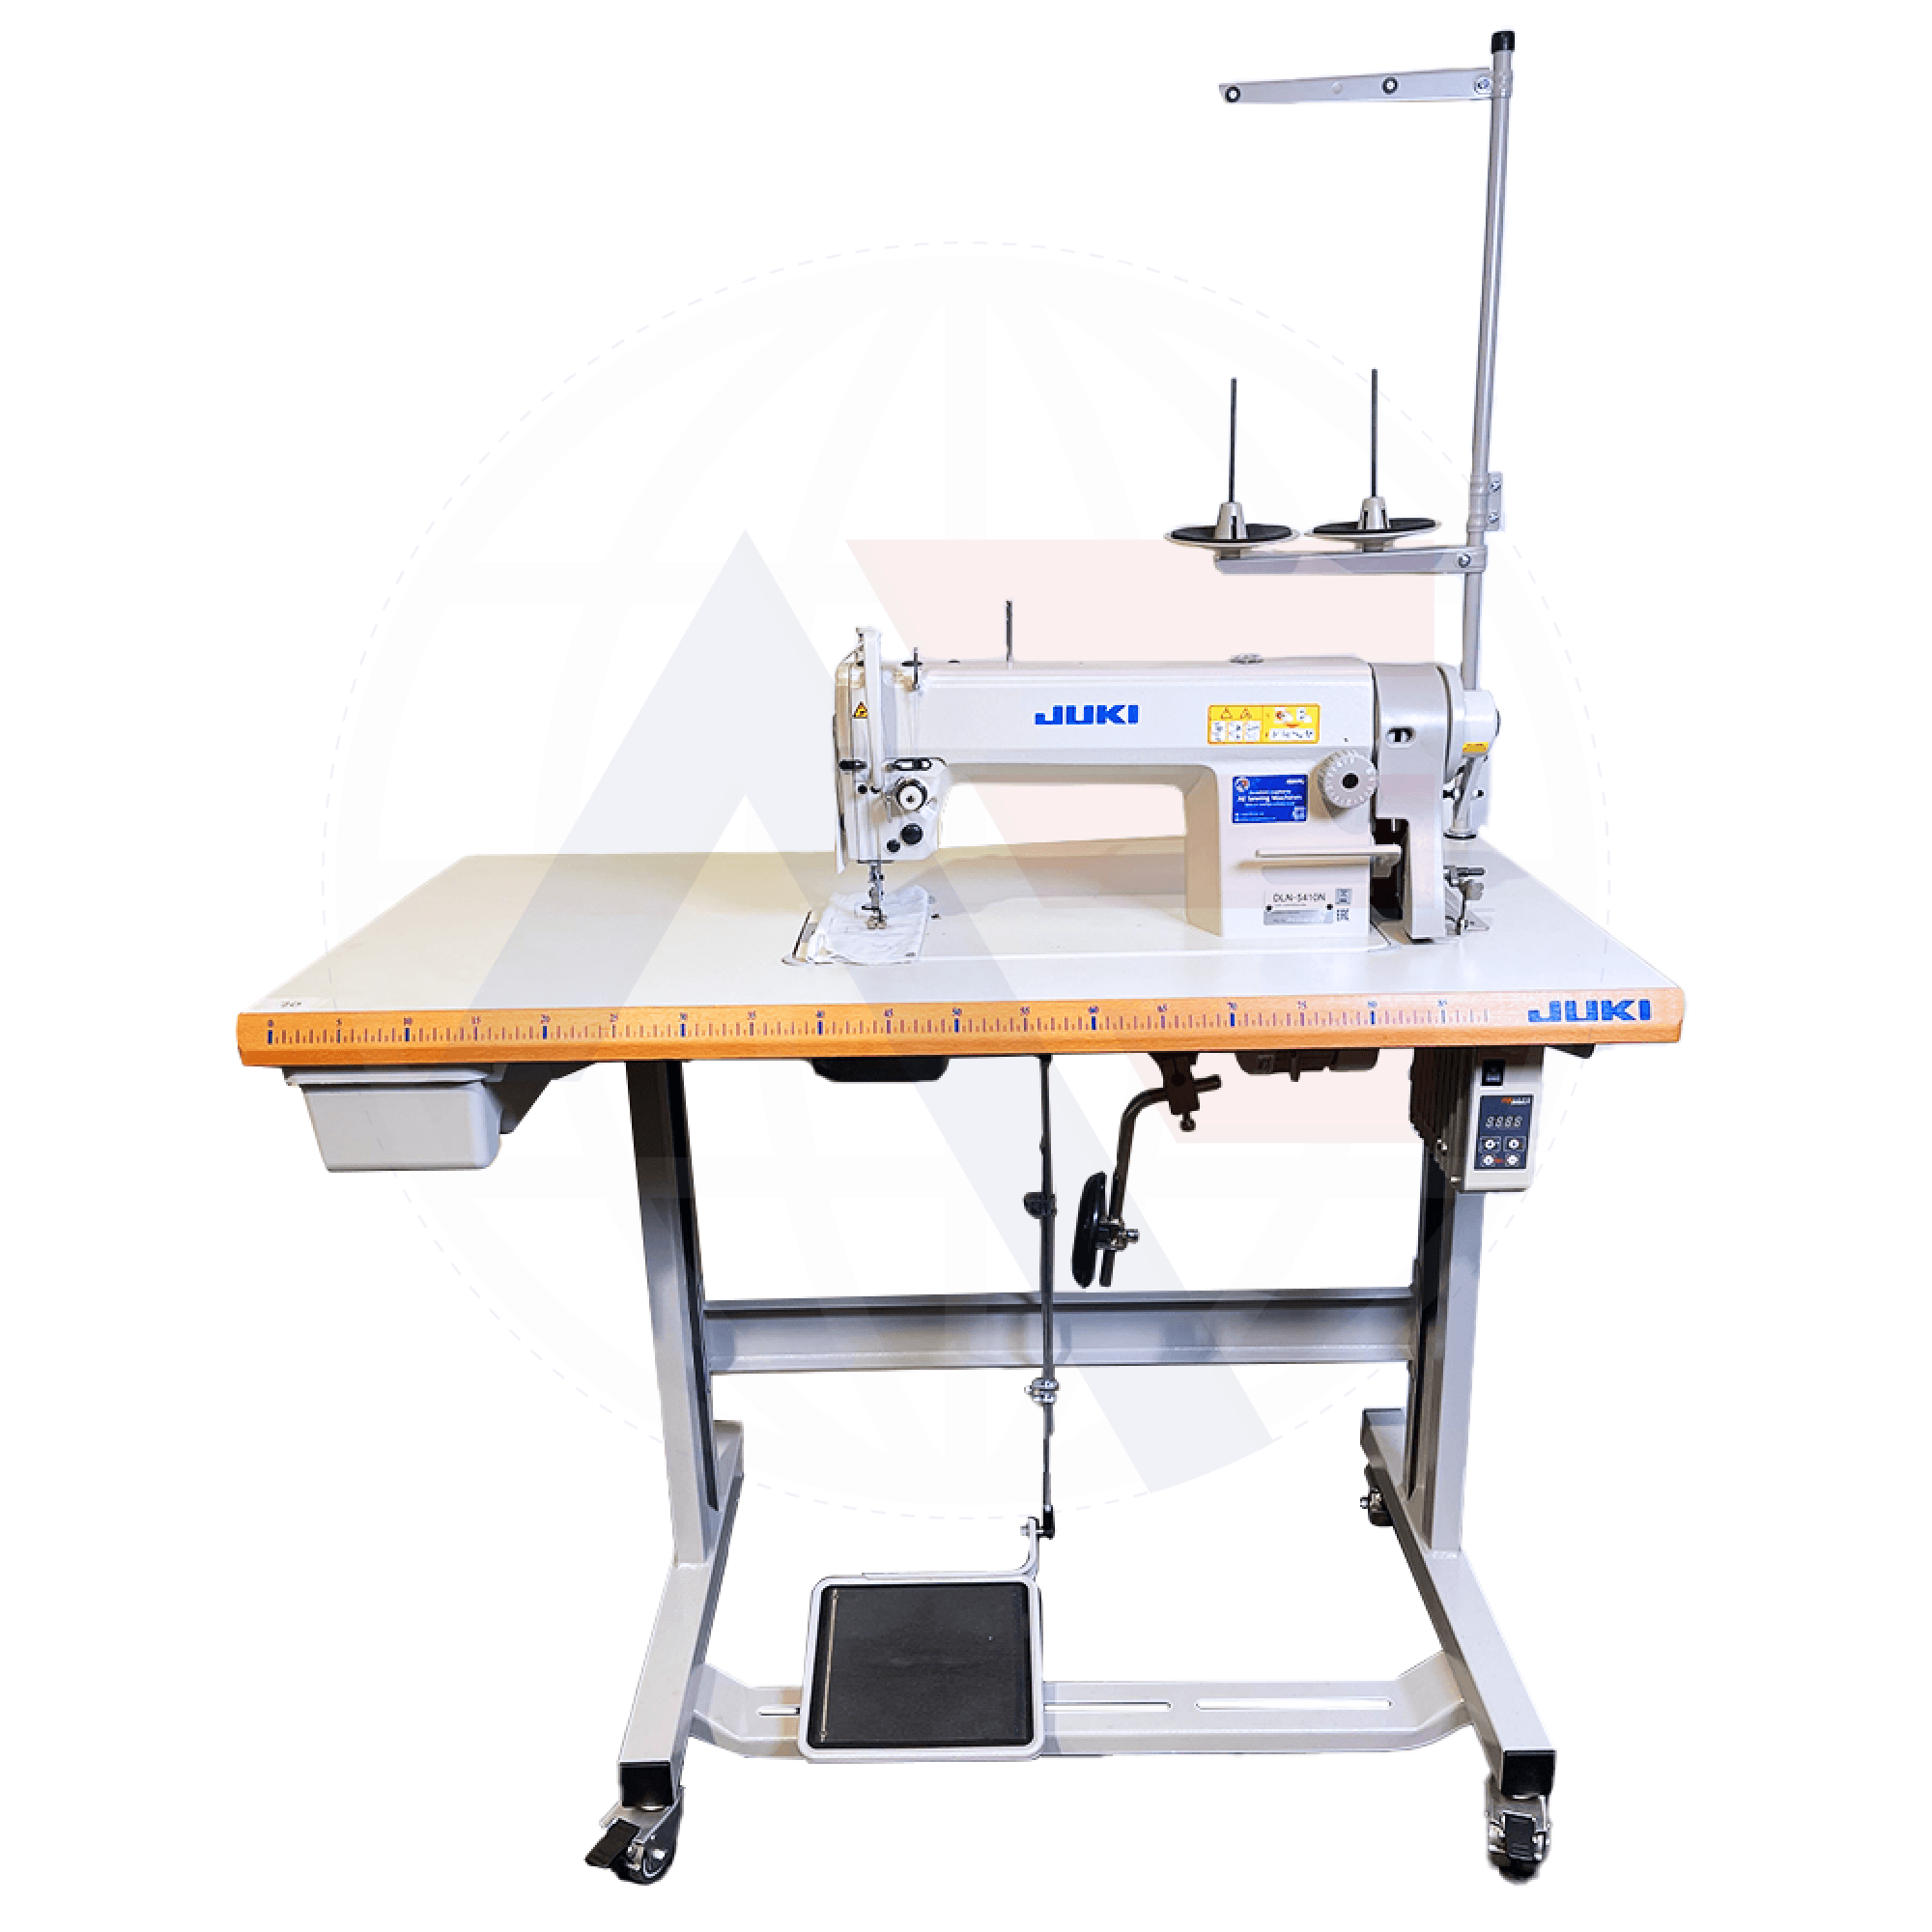 Juki Dln-5410N Needle-Feed Lockstitch Machine Sewing Machines